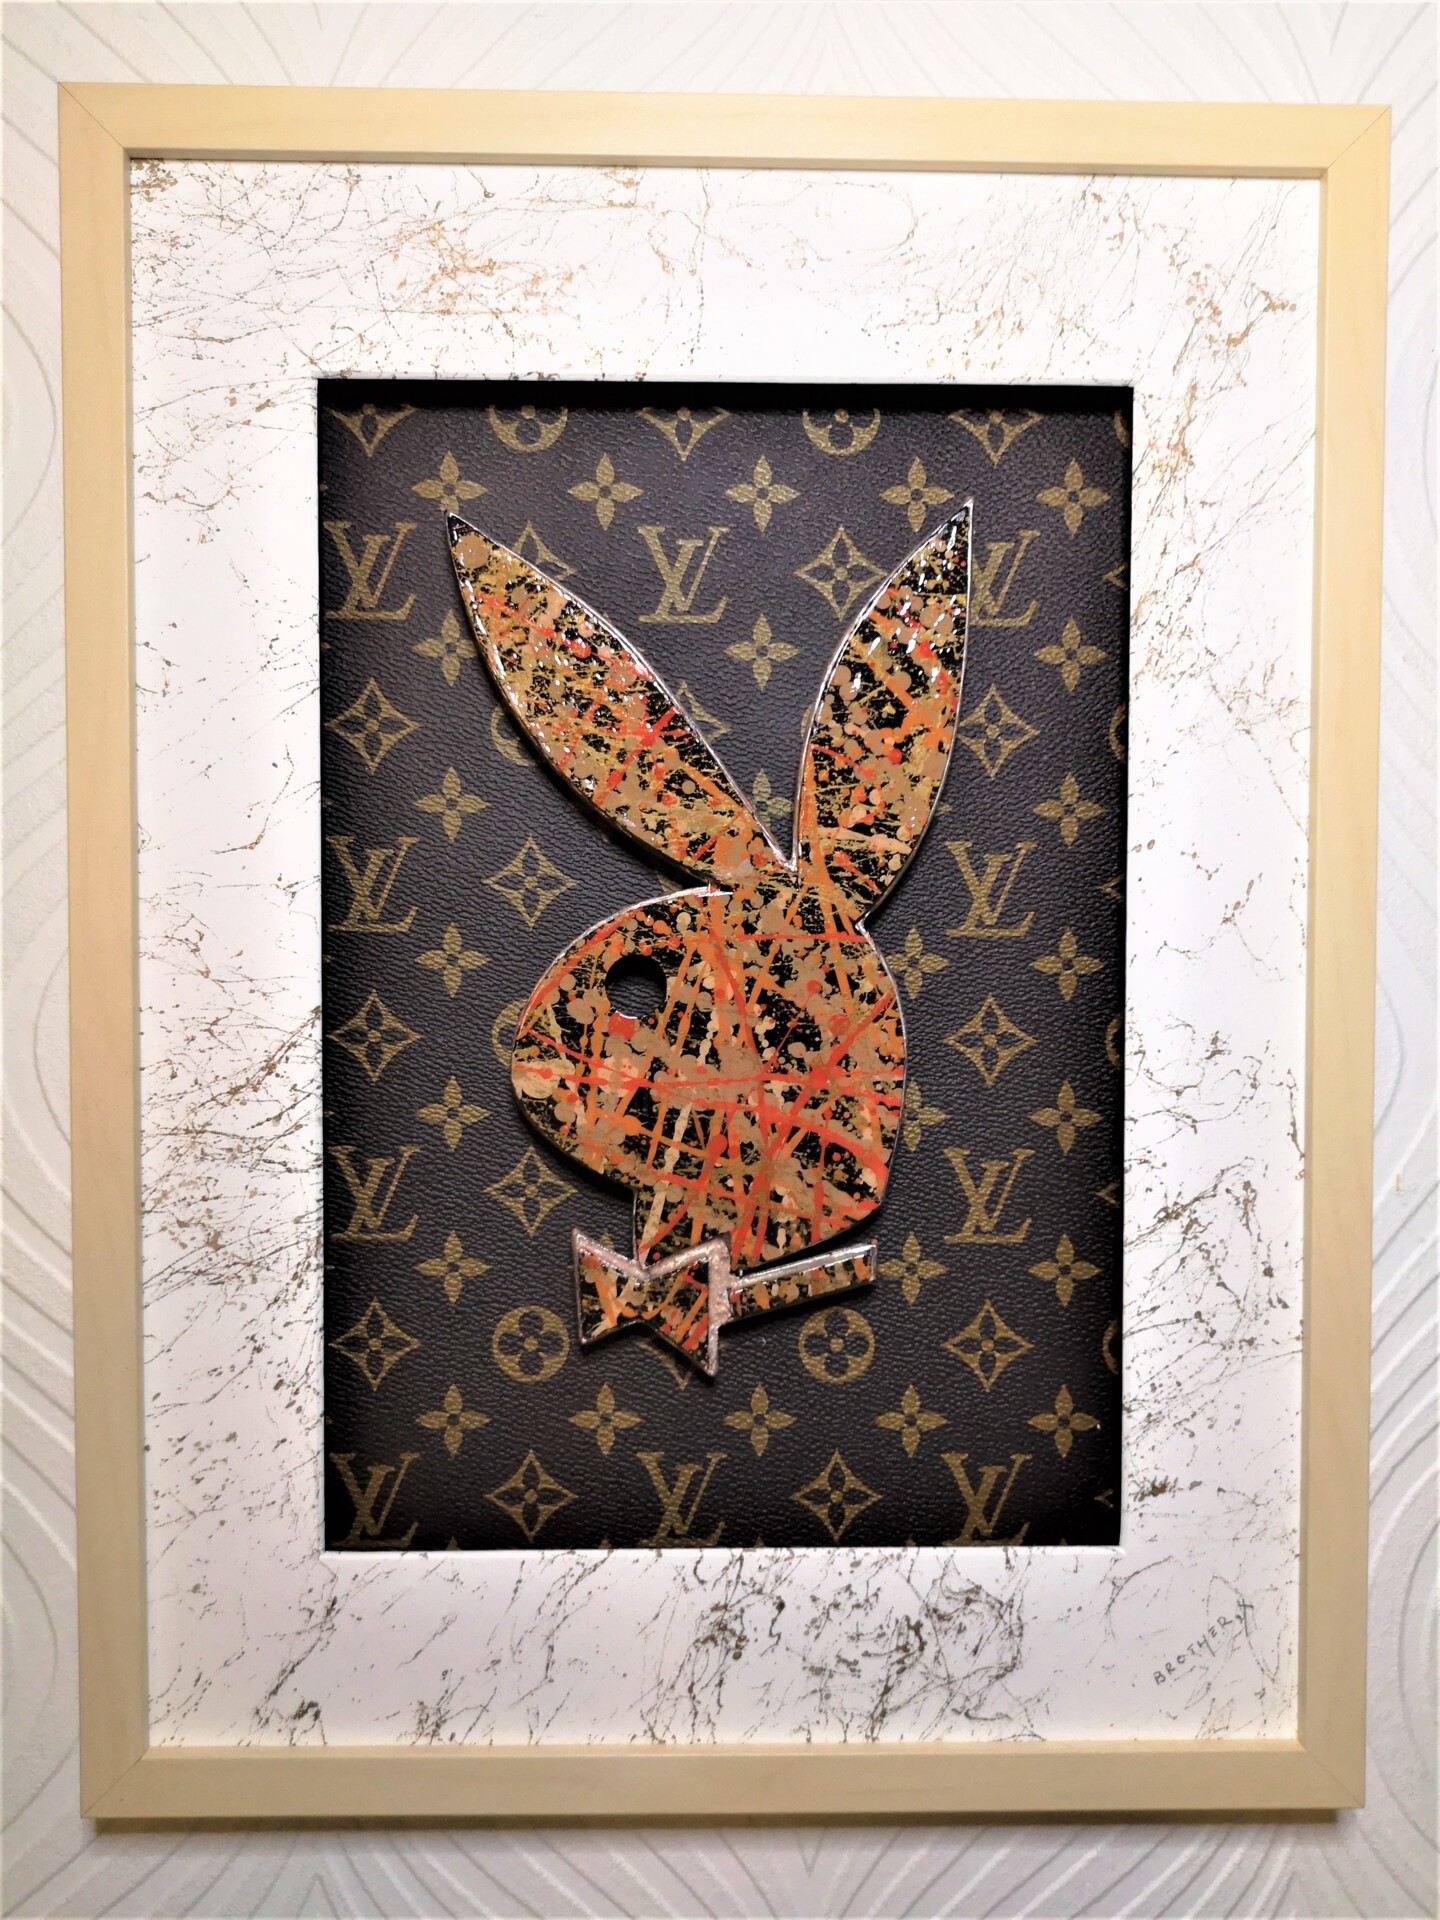 Playboy / Louis Vuitton hand painted art piece